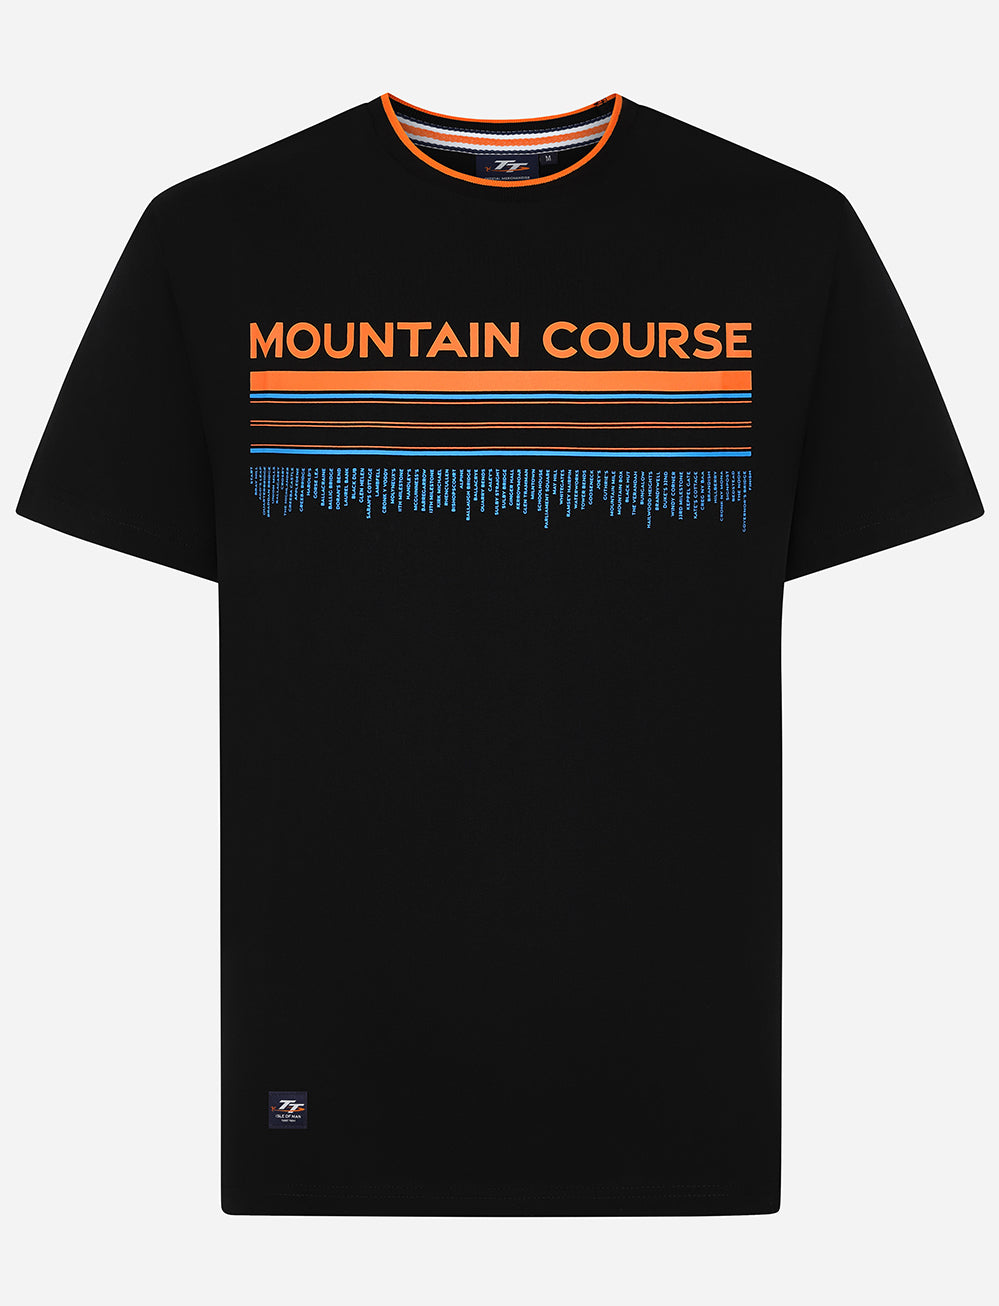 TT Races Mountain Course Wordmark T-Shirt - Black